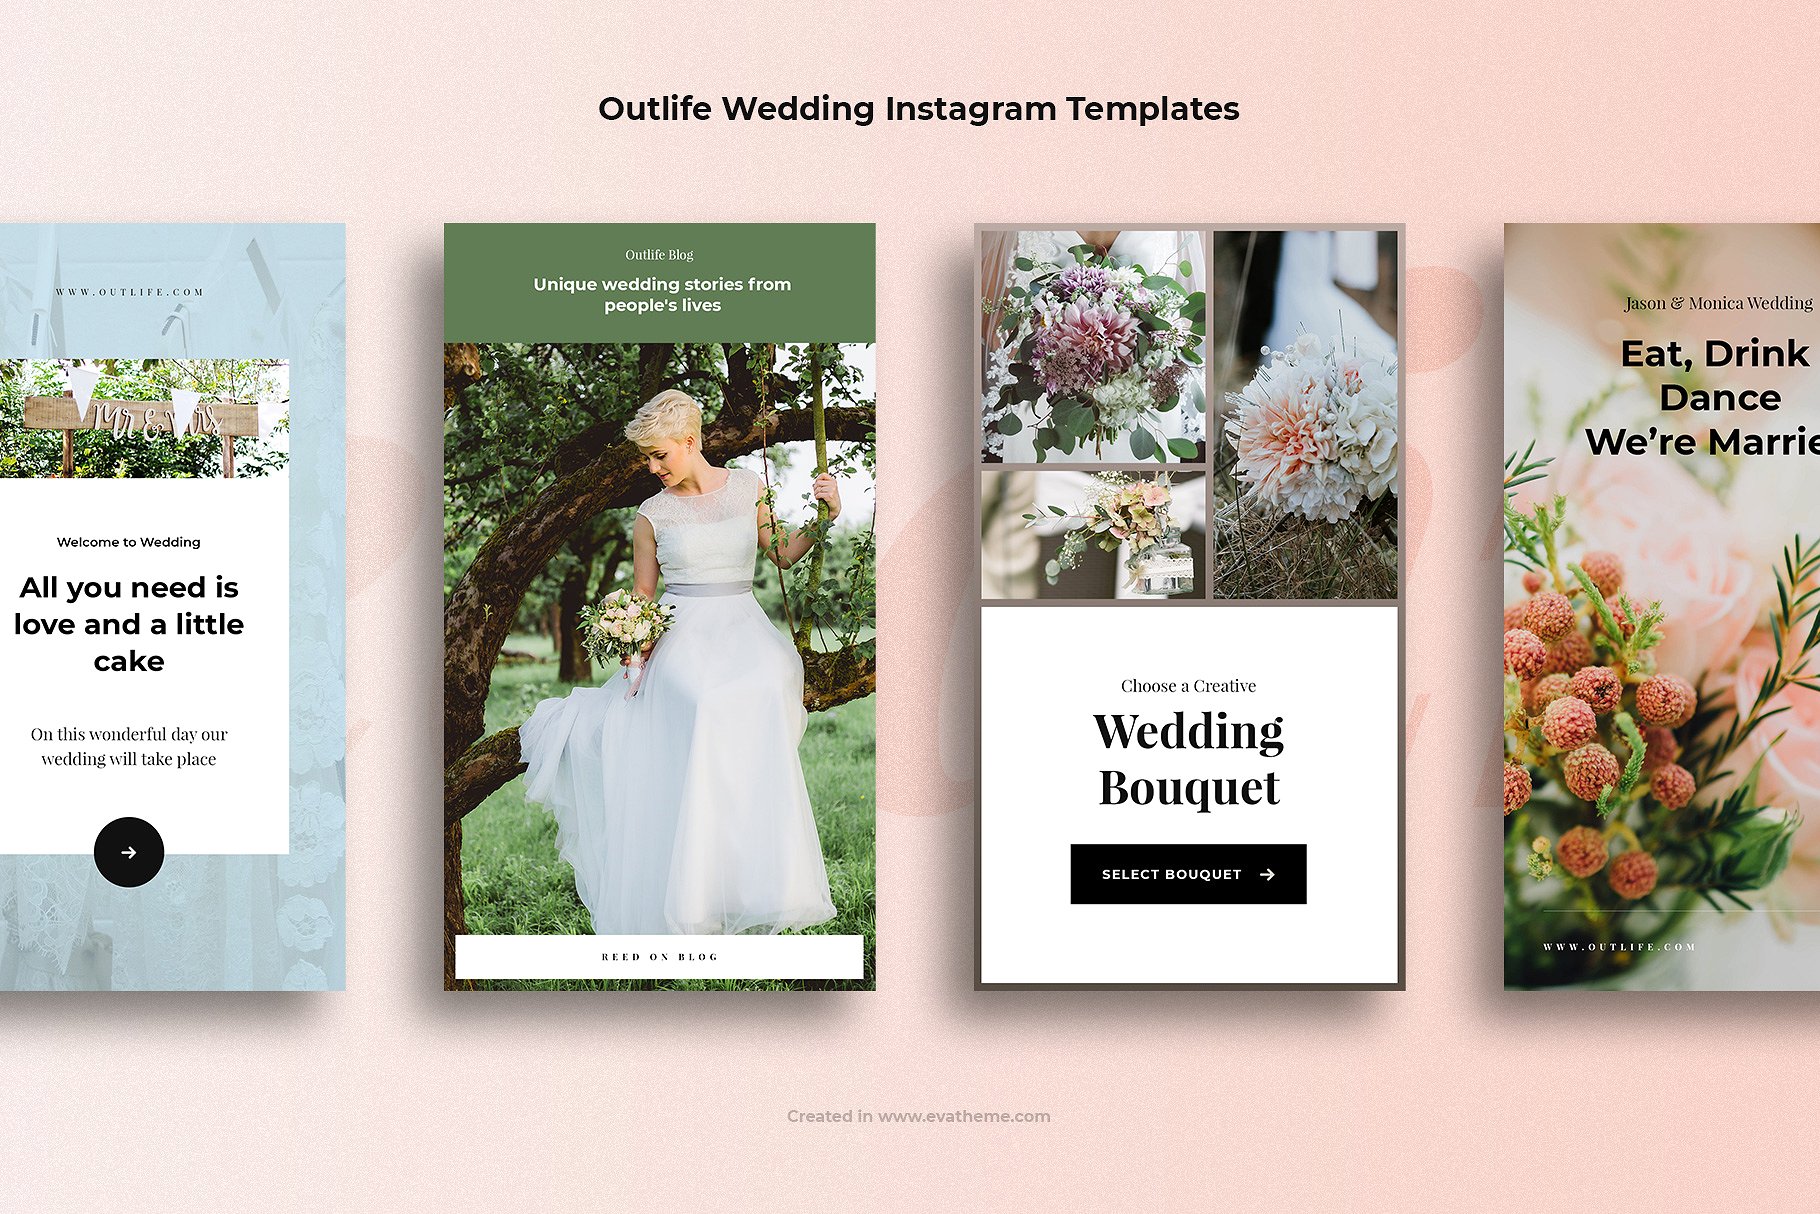 令人愉悦的婚礼旅游产品促销Instagram模板 Pleasant Wedding Travel Product Promotion Instagram Template插图8